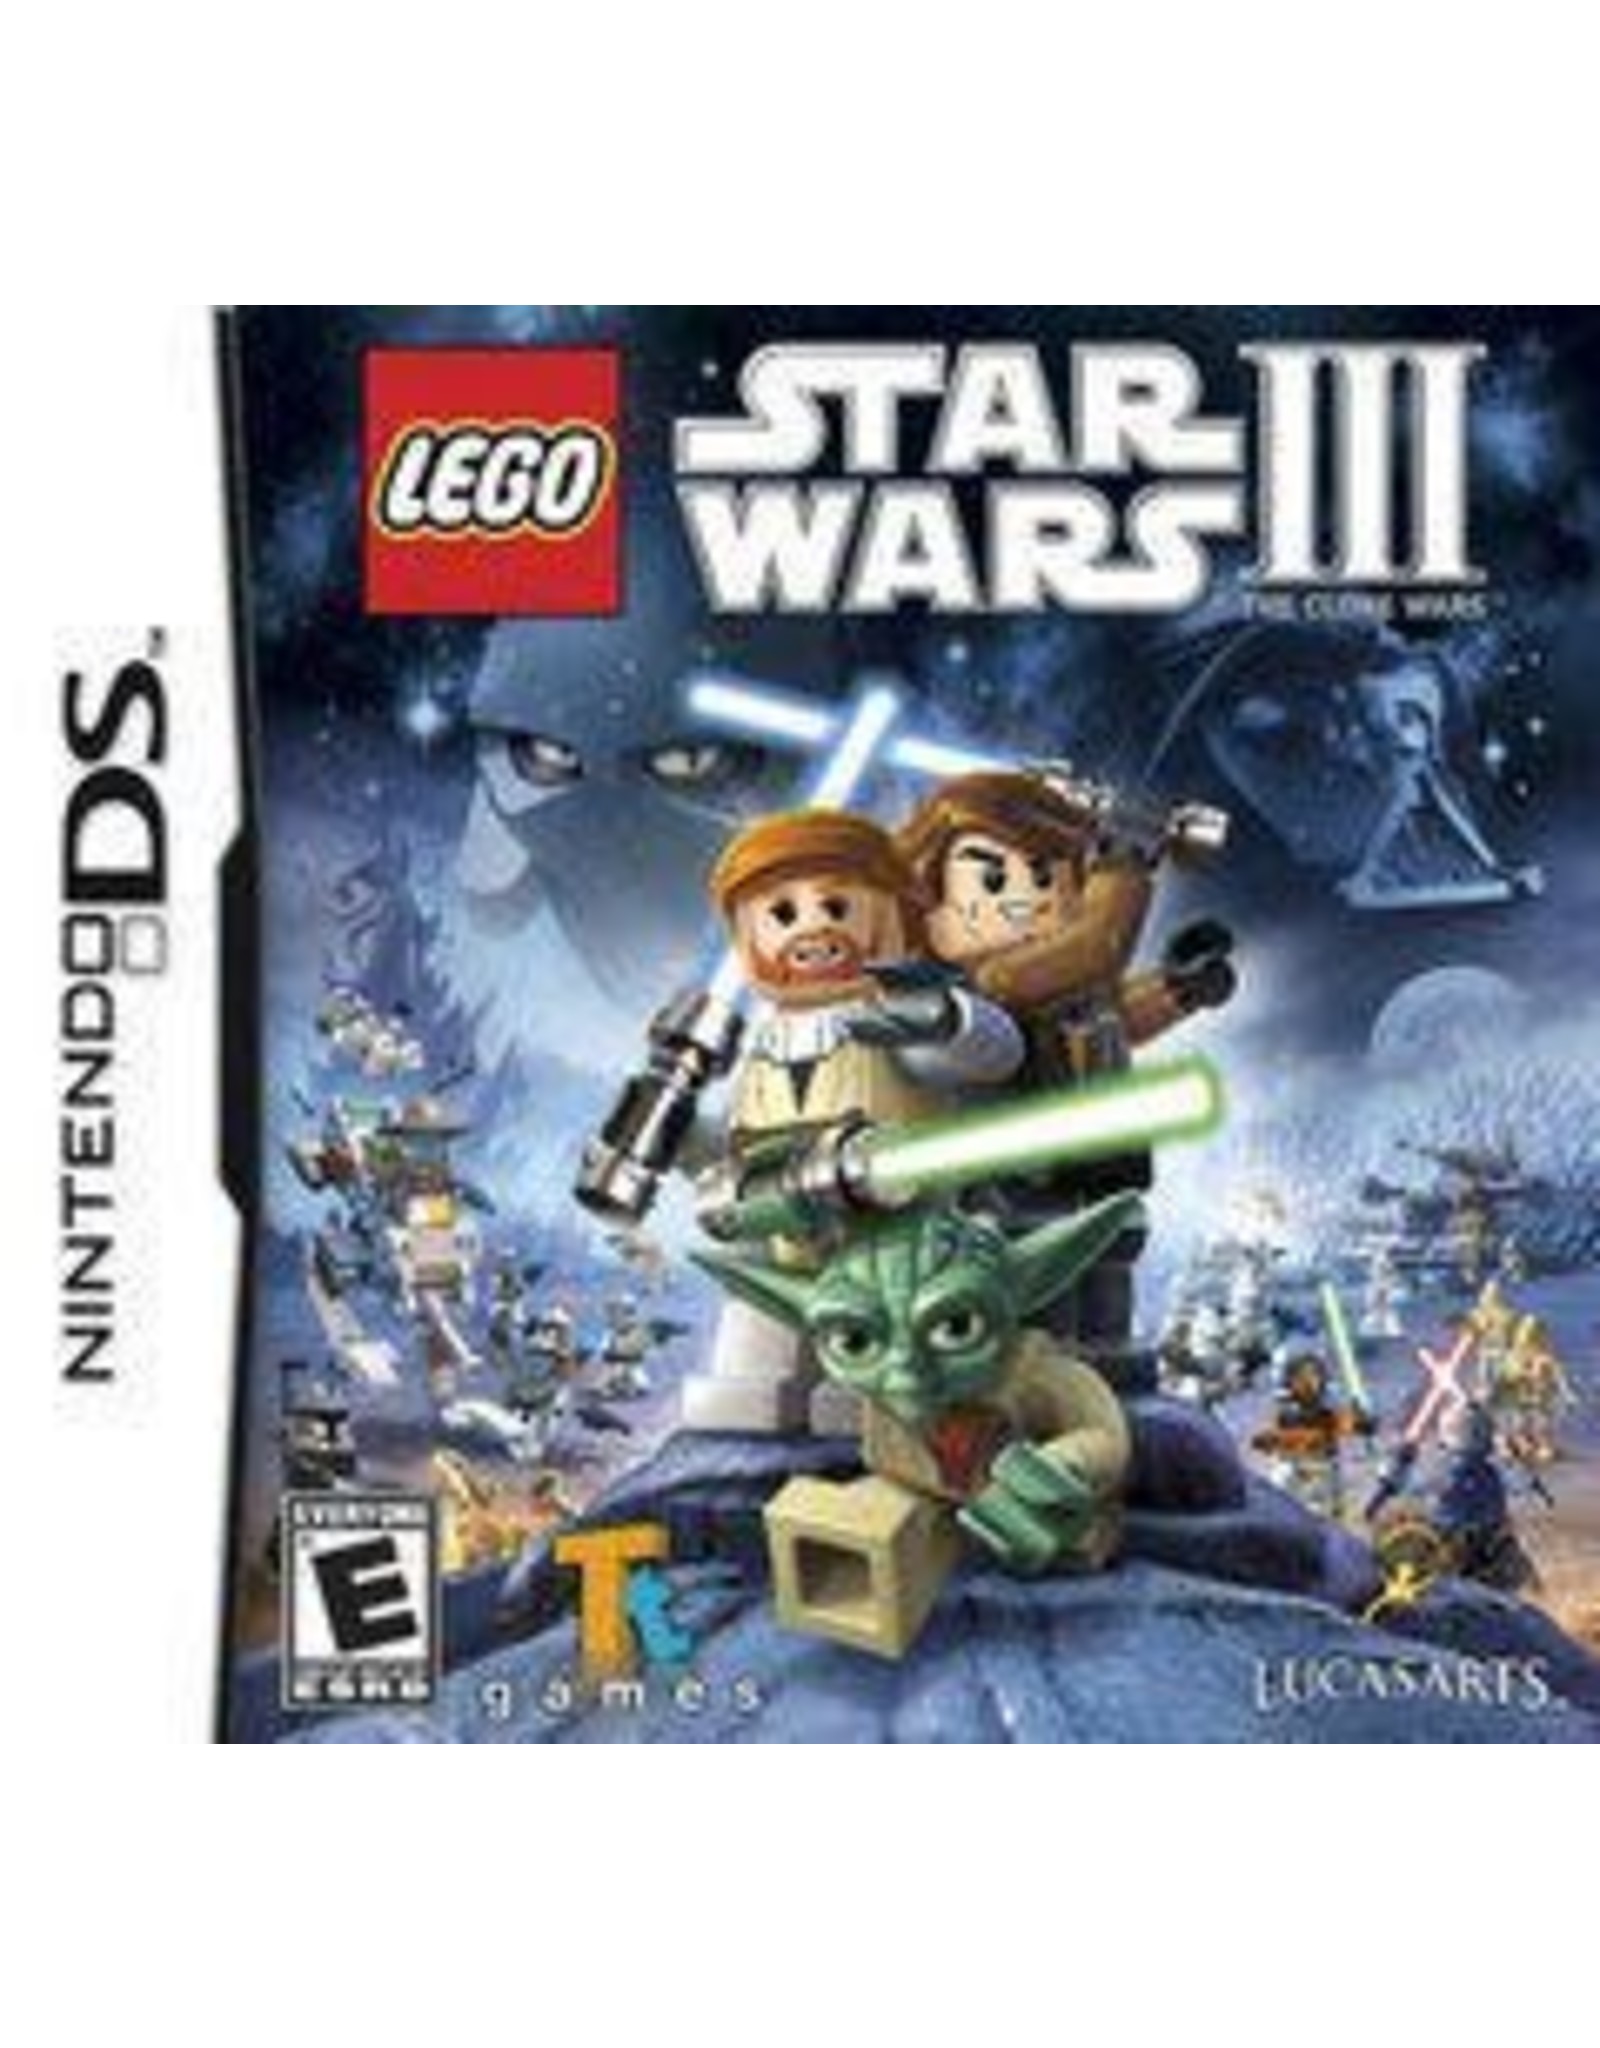 Nintendo DS LEGO Star Wars III: The Clone Wars (CiB)